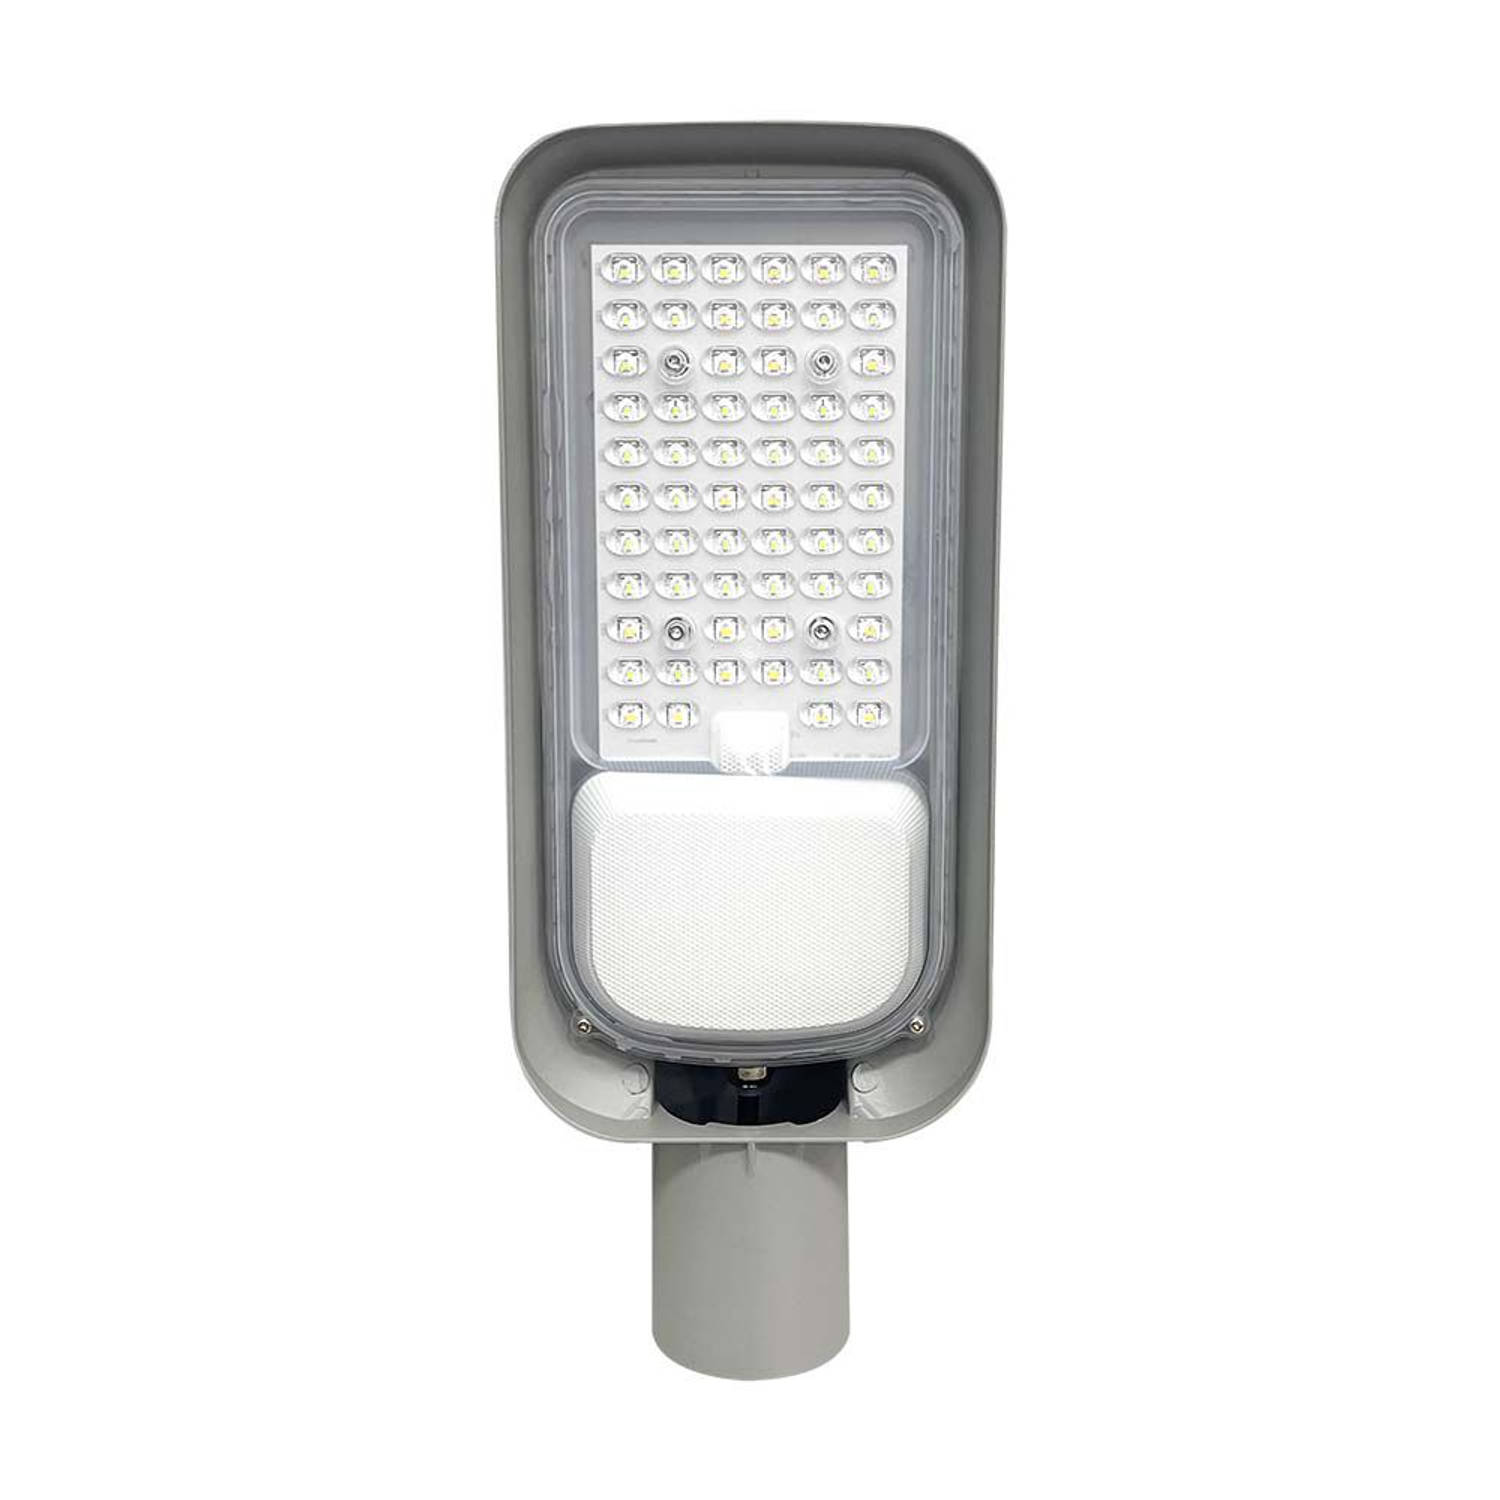 V-TAC VT-150100ST LED Straatverlichting - Slim Straatverlichting - IP65 - Zwart - 100 Watt - 8700 Lumen - 6500K